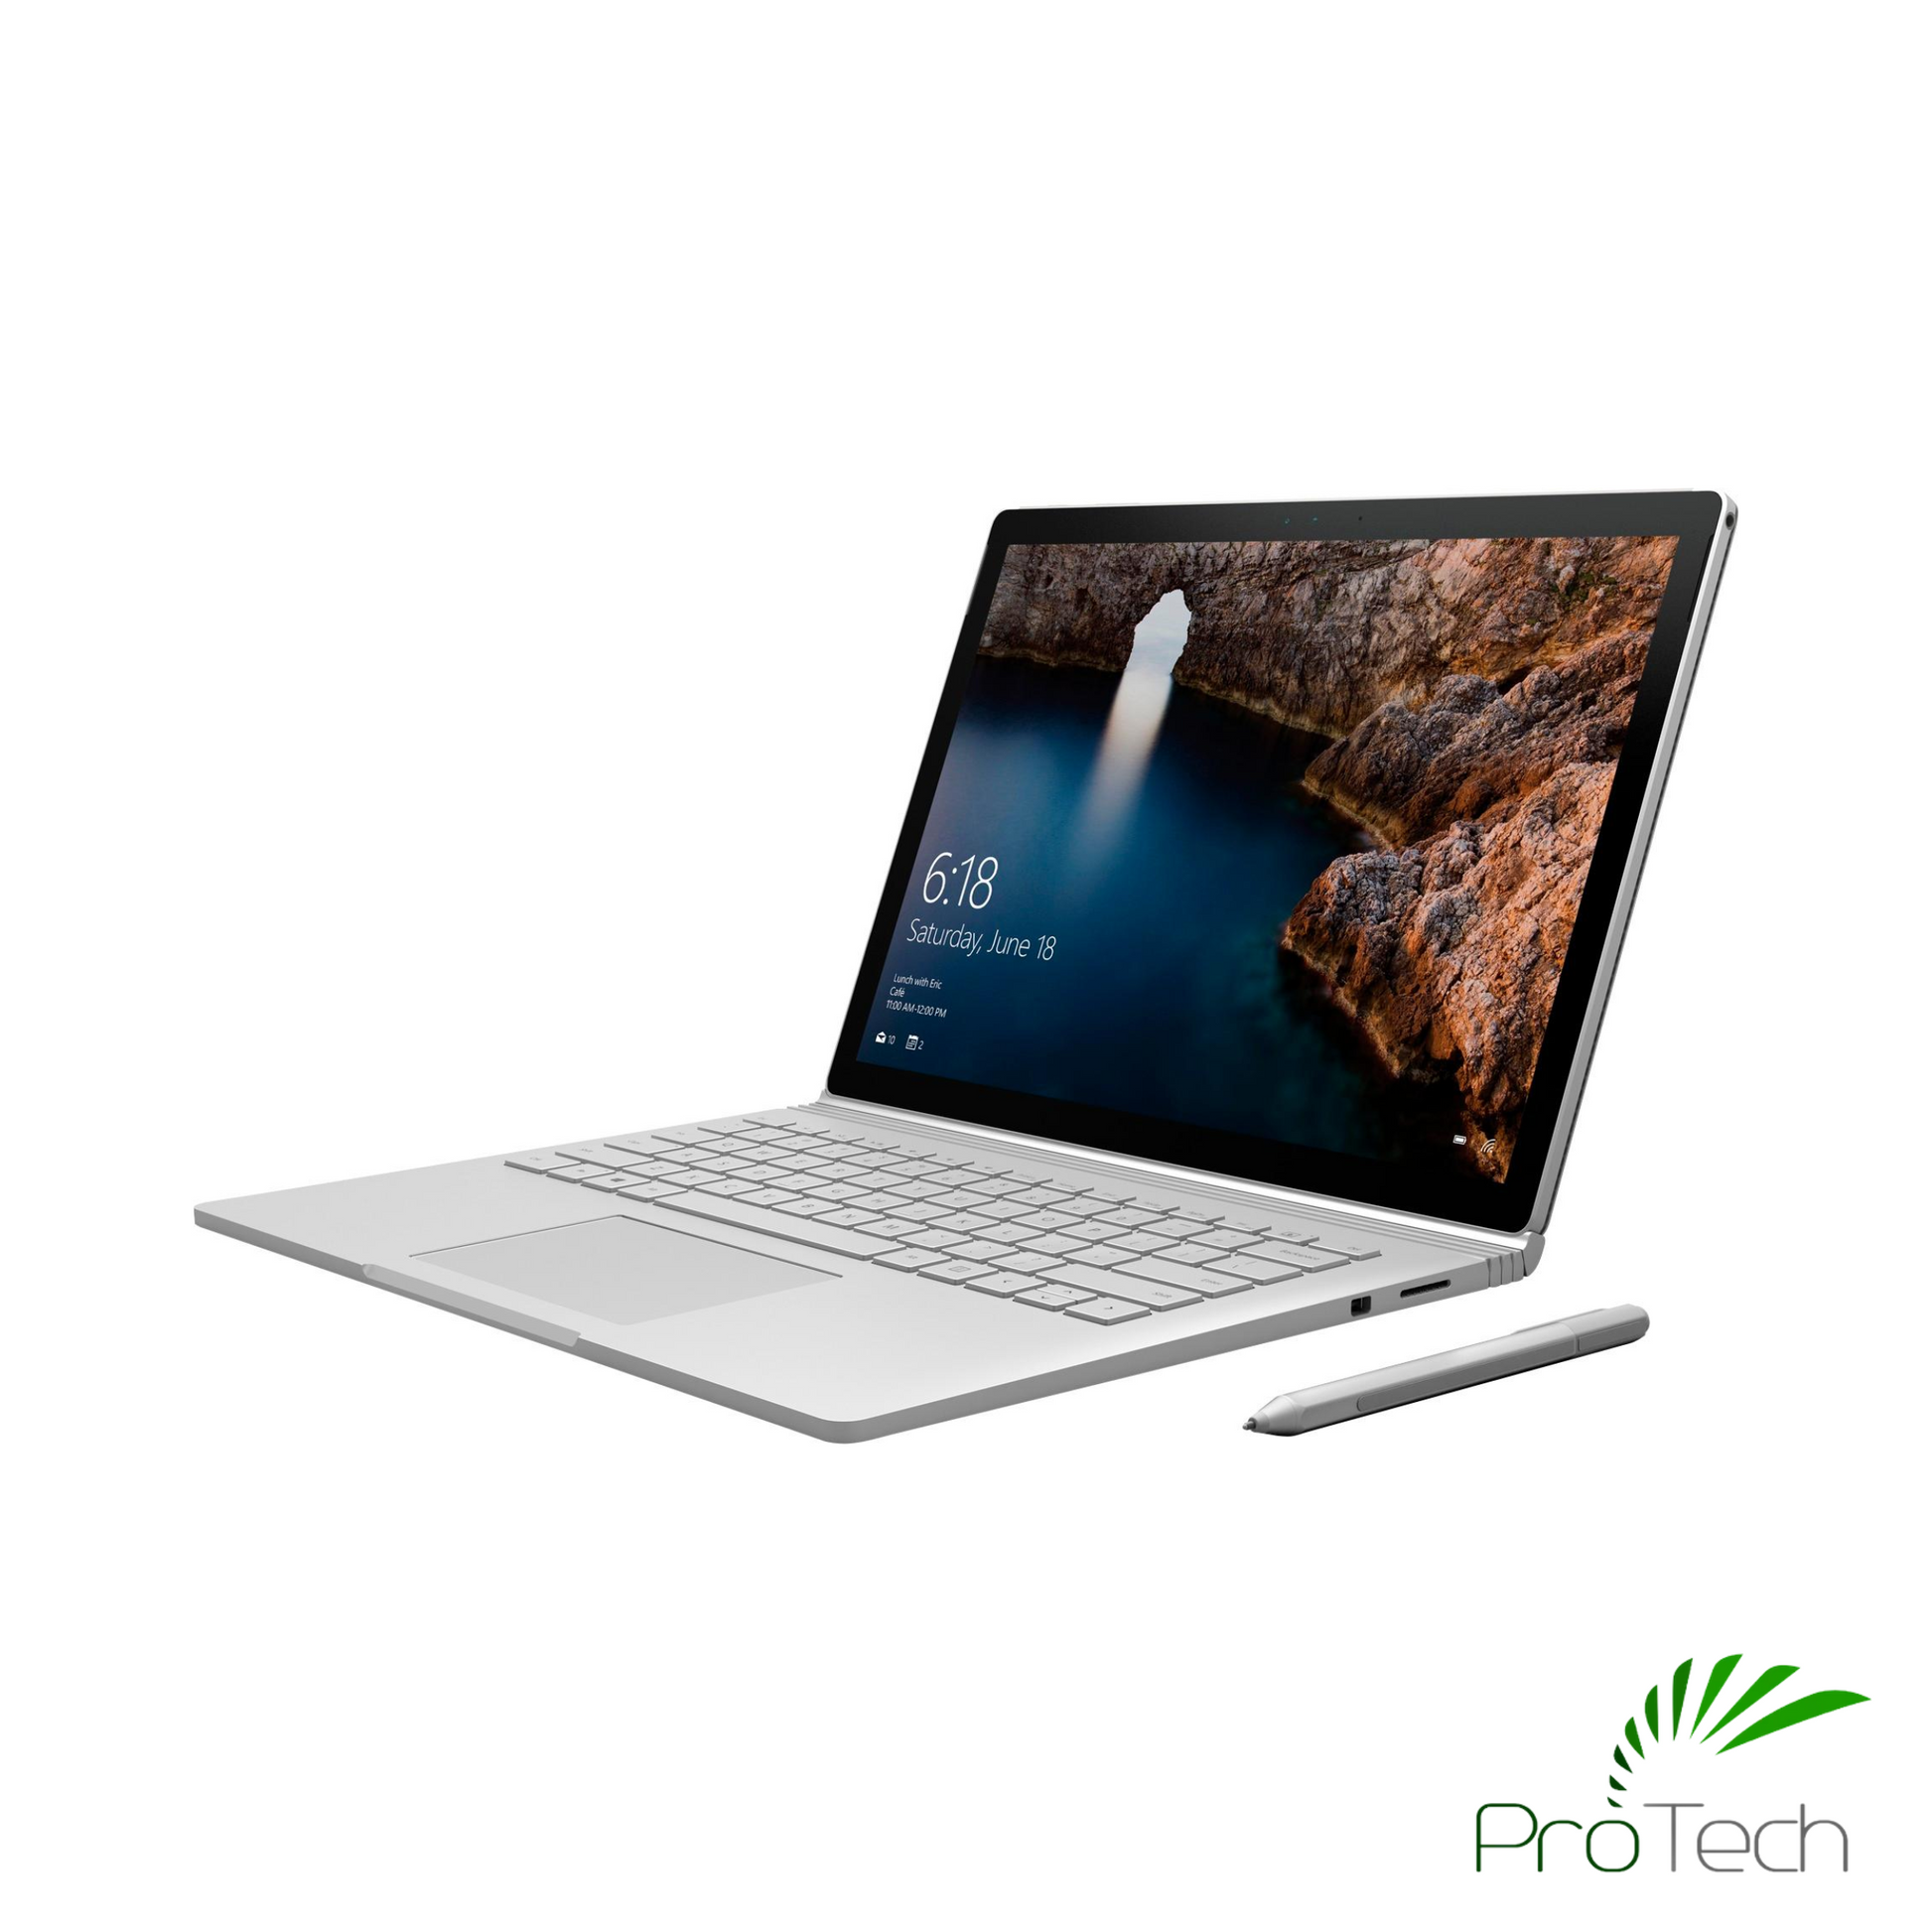 Microsoft Surface Book 1, Core i7, 8GB RAM, 128GB SSD, 2-in-1 laptop, productivity, versatility, professional laptop, creative laptop, student laptop.